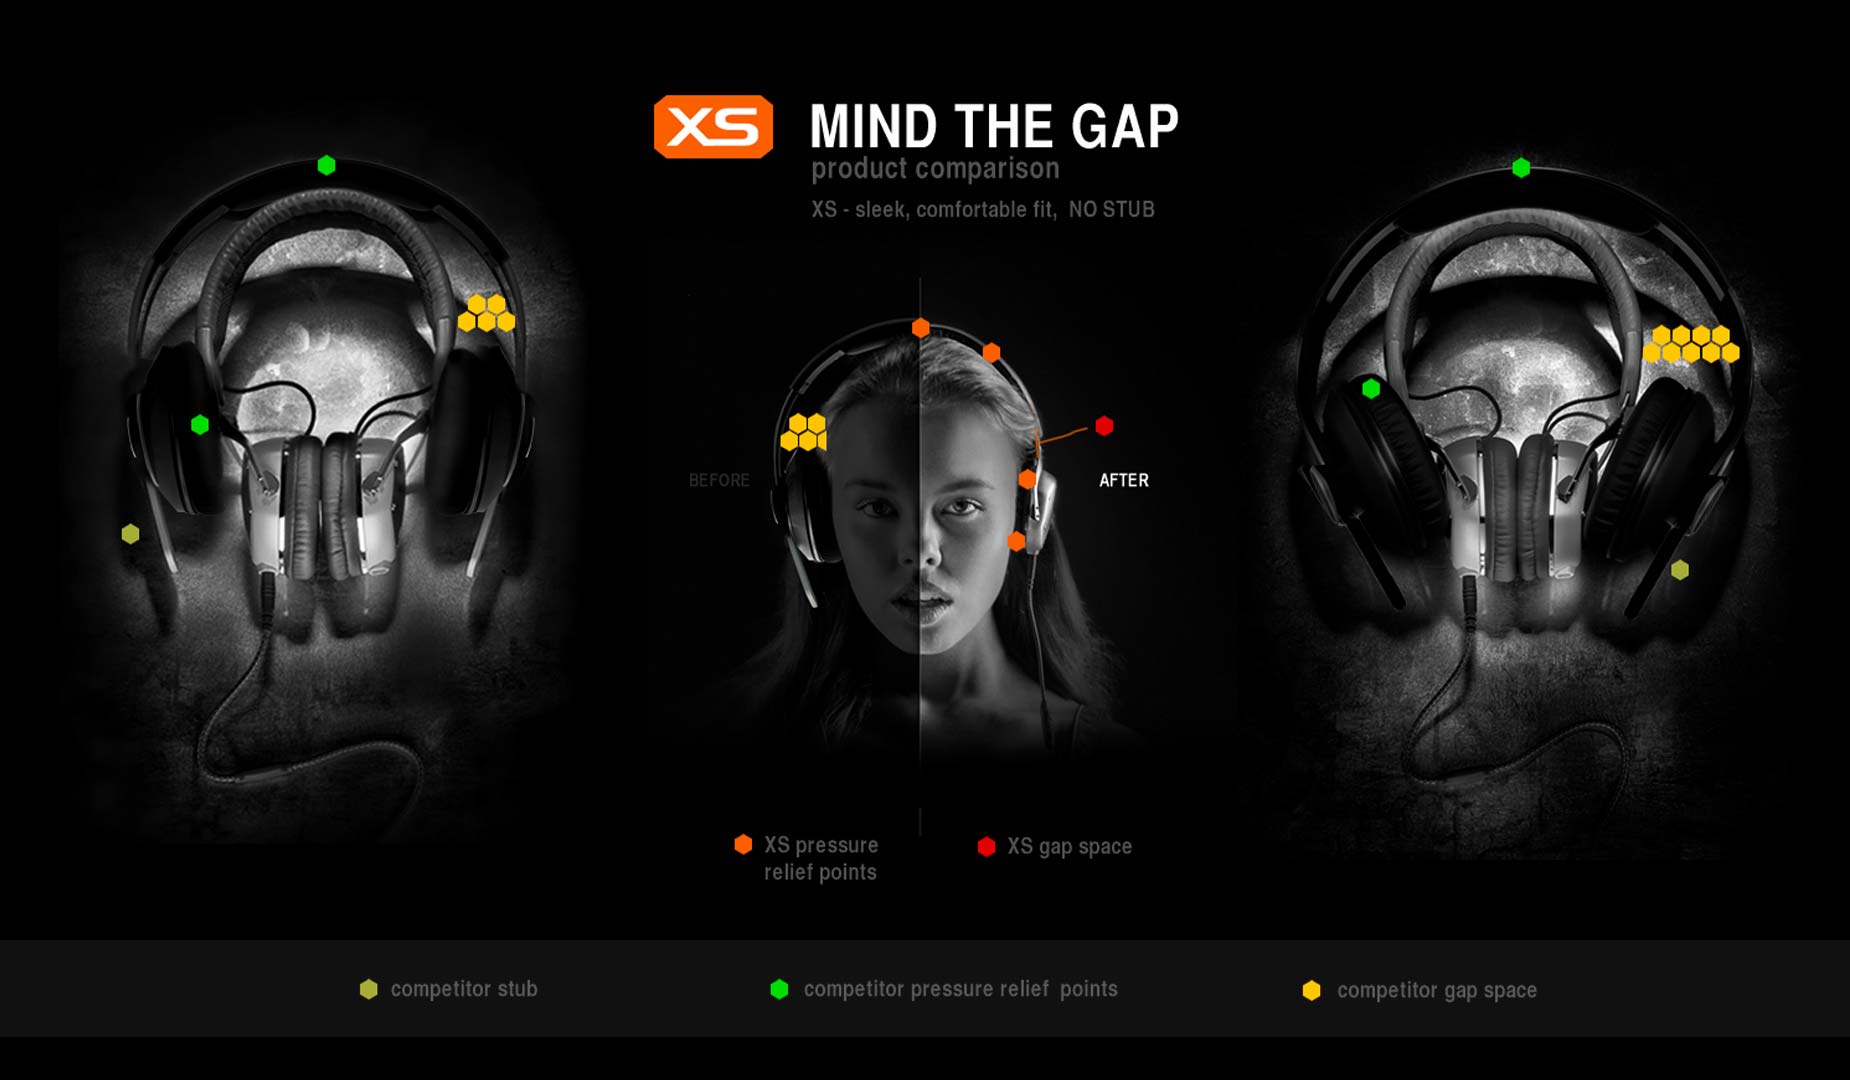 V-MODA 3D Mind the Gap Infographic